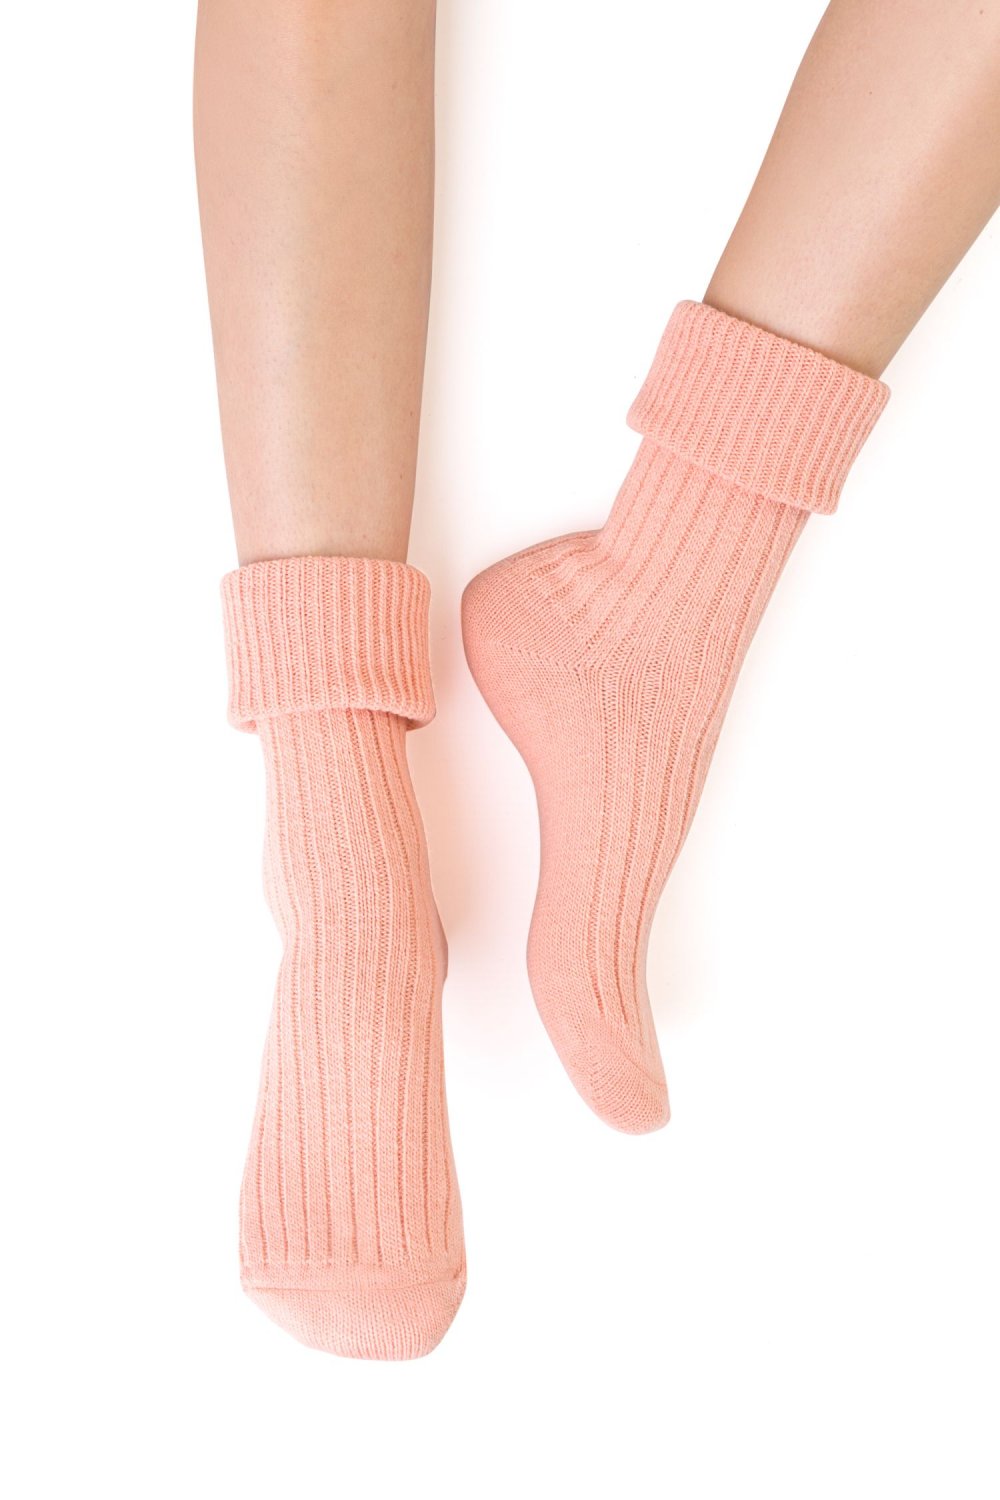 E-shop Dámske ponožky 067 peach